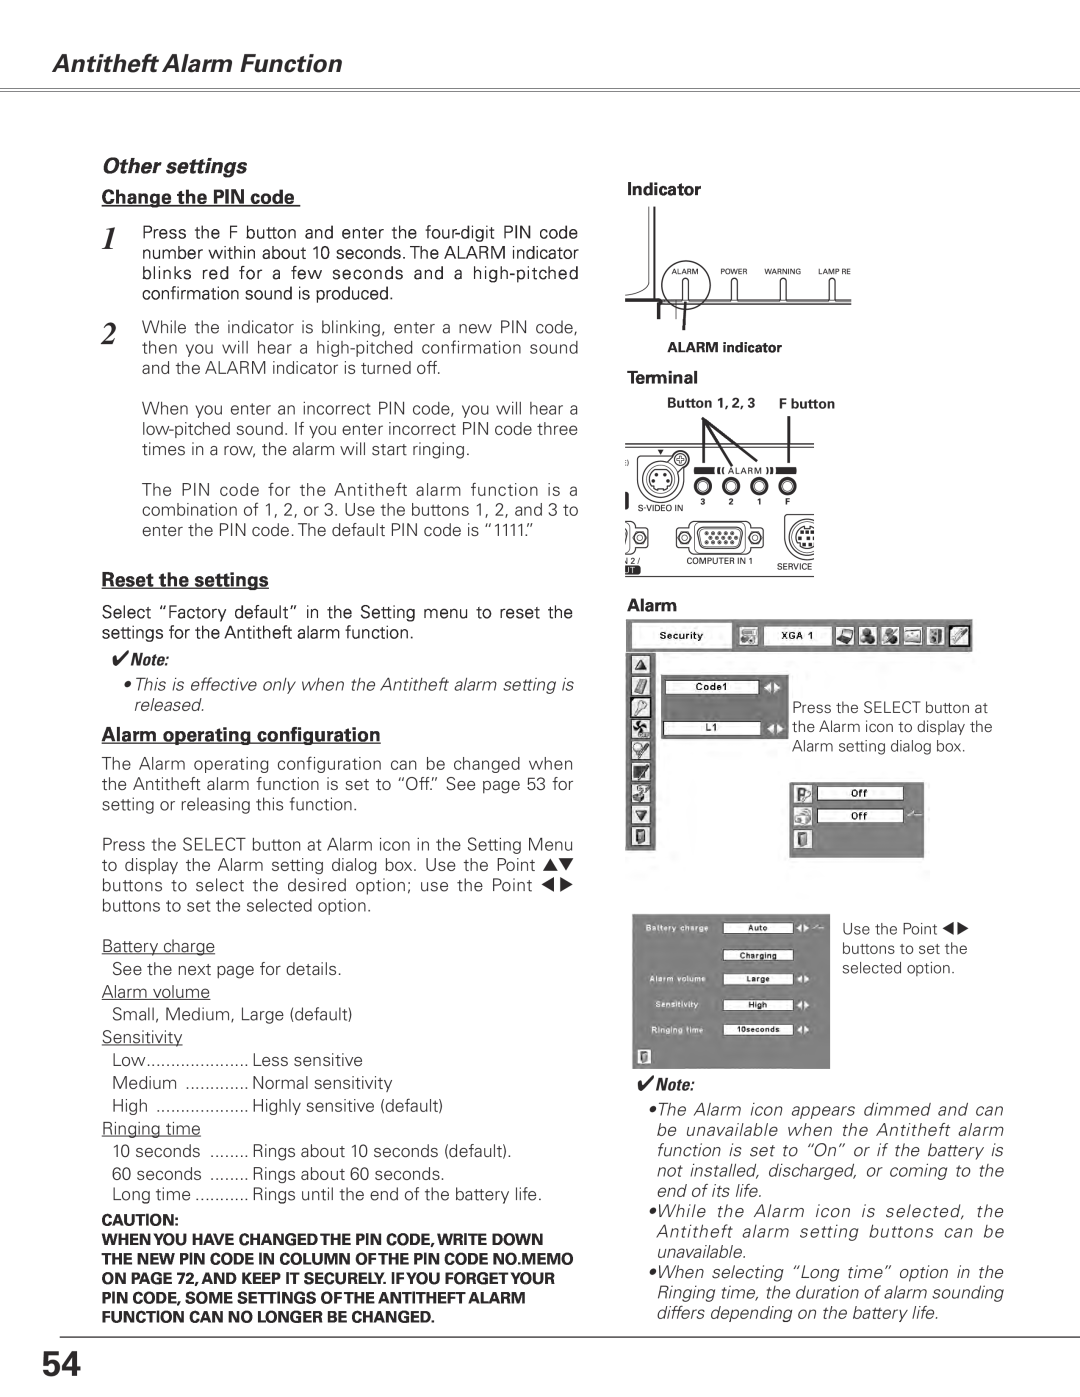 Sanyo PLC-XE50 owner manual Antitheft Alarm Function, Other settings, Indicator, Terminal 